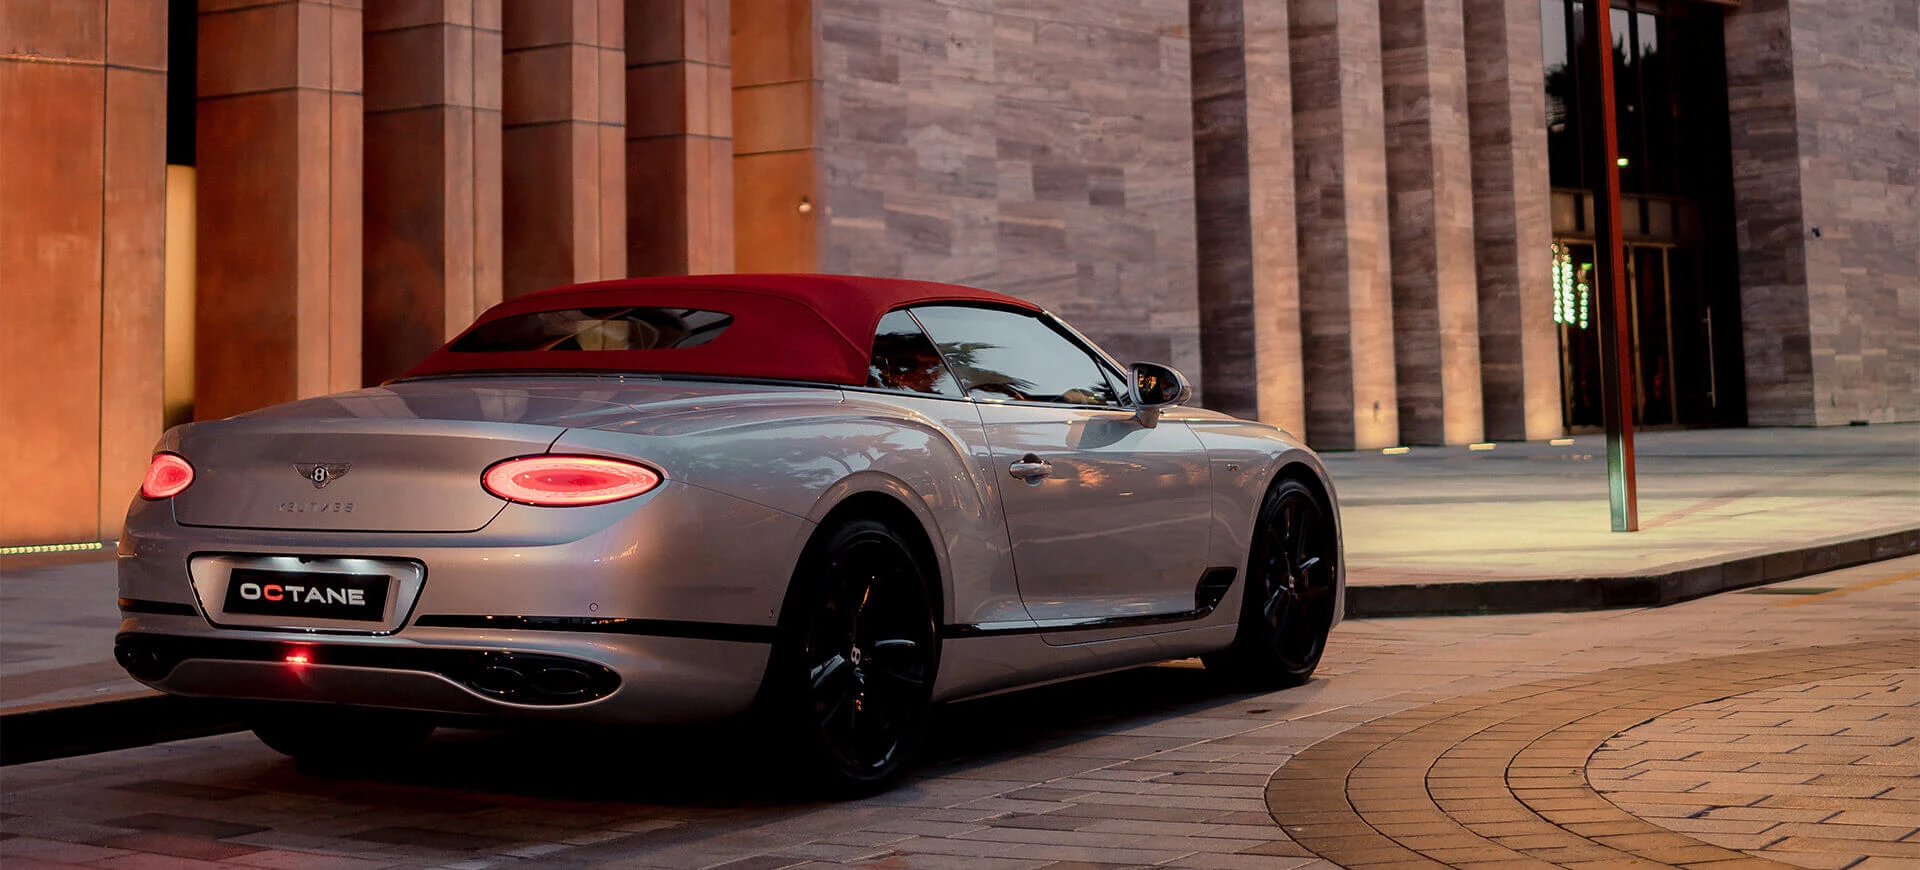 Alquilar un Bentley en Dubai